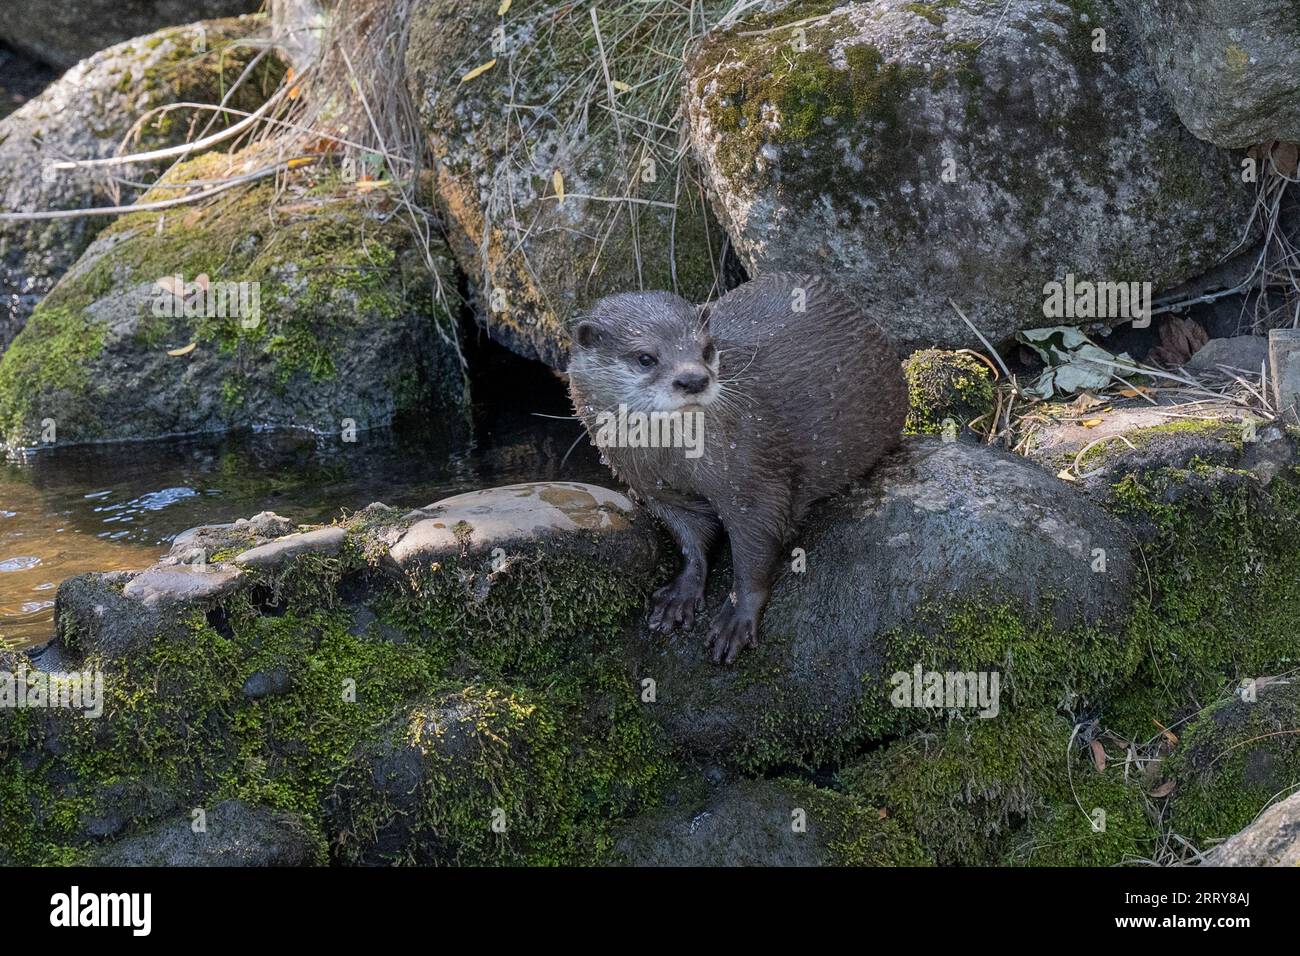 Asian small-clawed otter (Amblonyx cinerea or Aonyx cinereus). Stock Photo